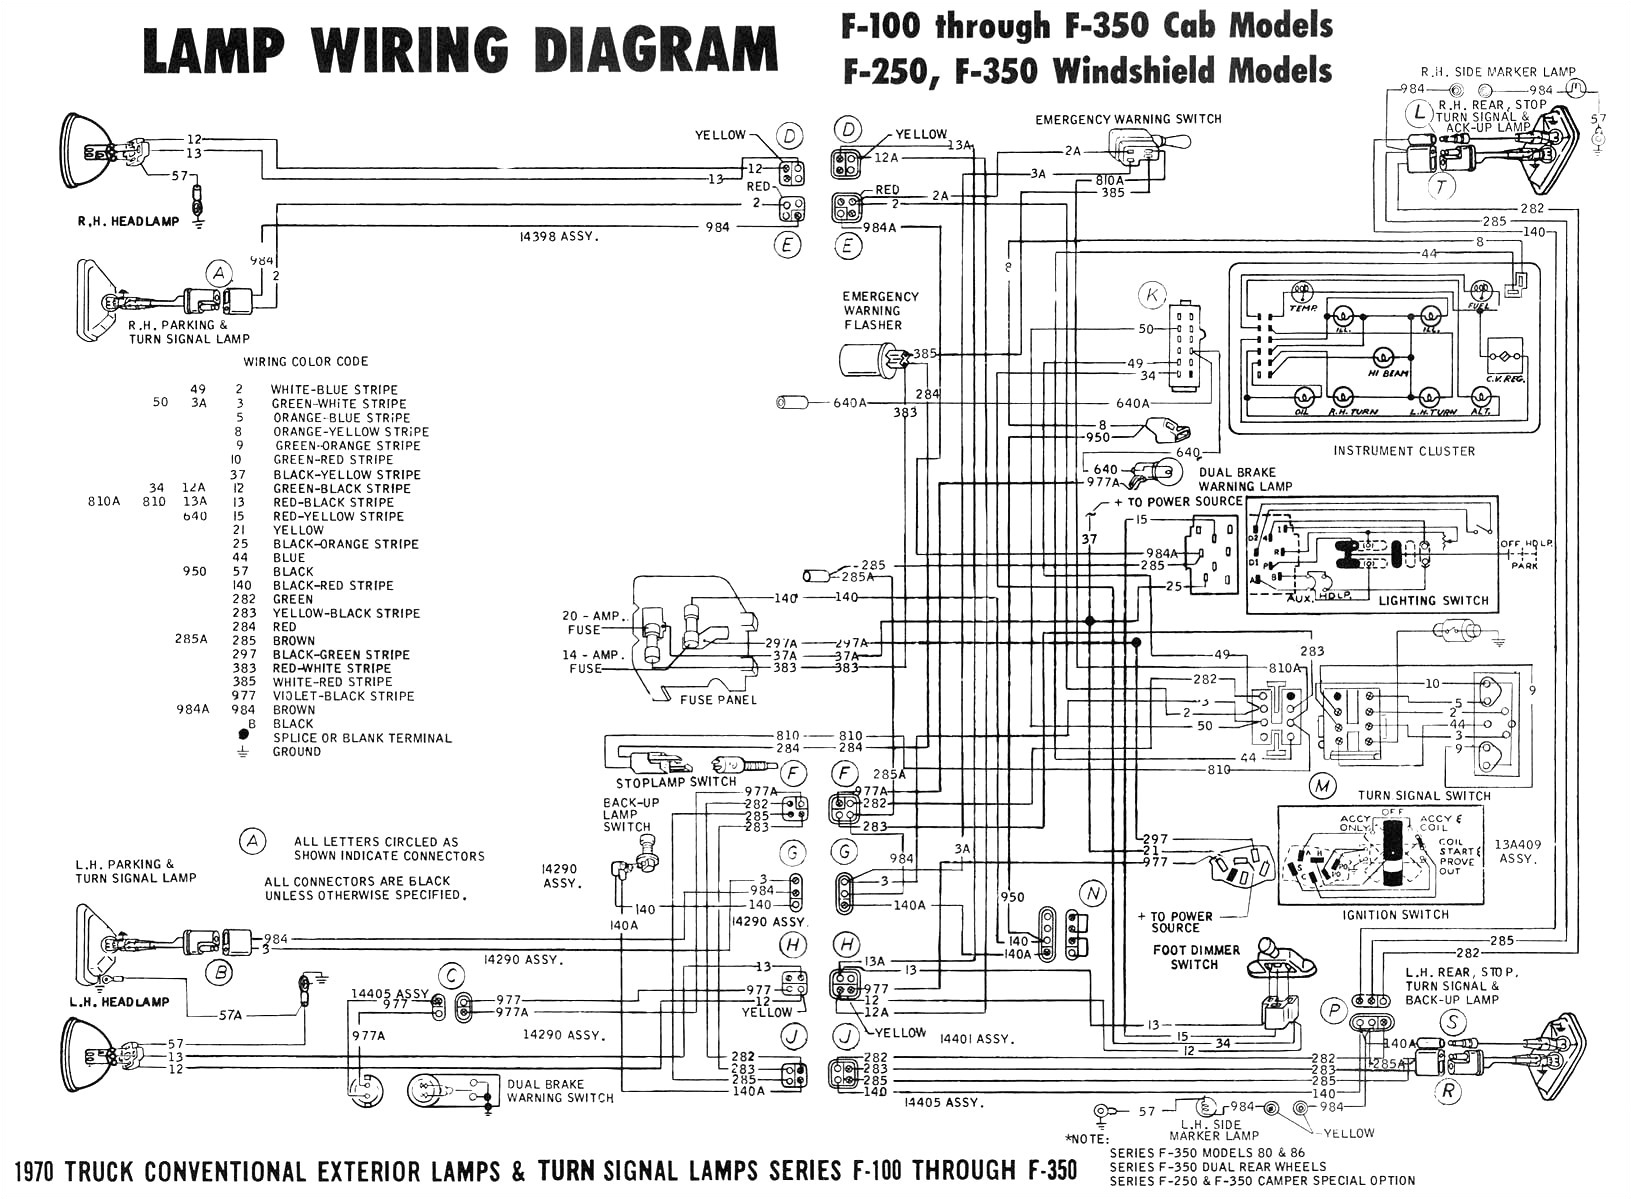 download eaton wiring manual wiring diagram schematic wiring diagram motorguide foot pedal free download